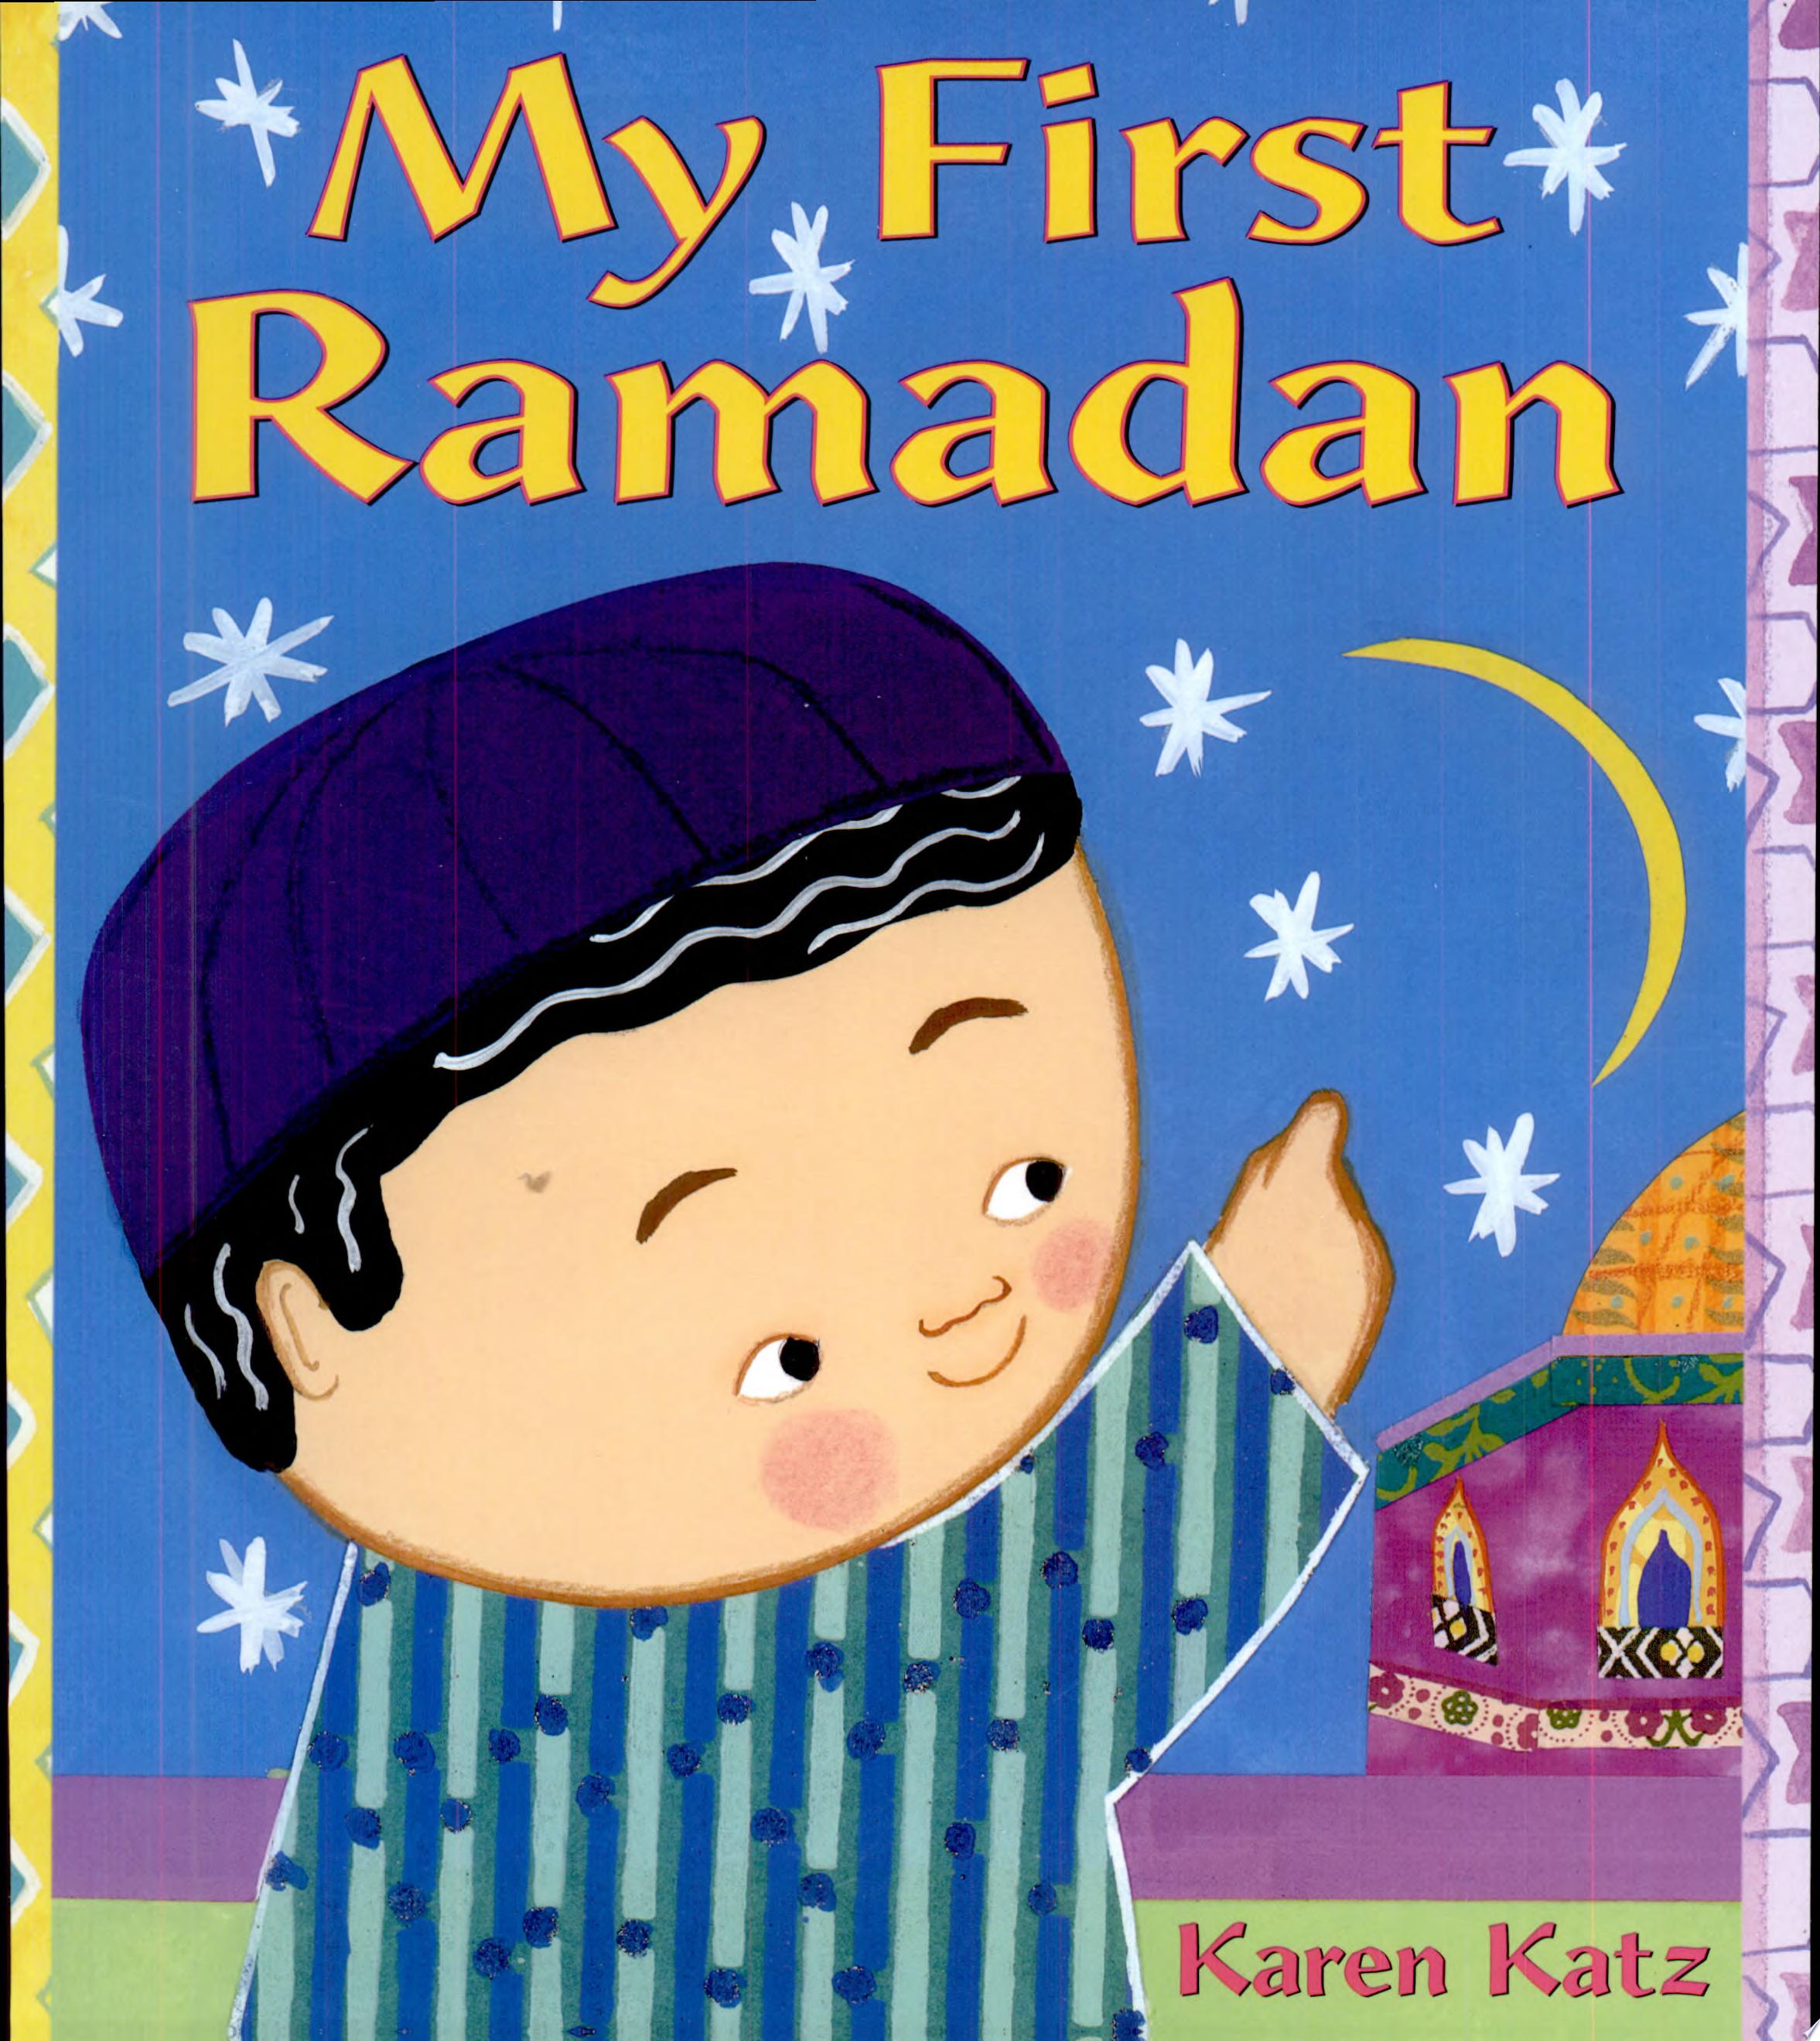 Image for "My First Ramadan"